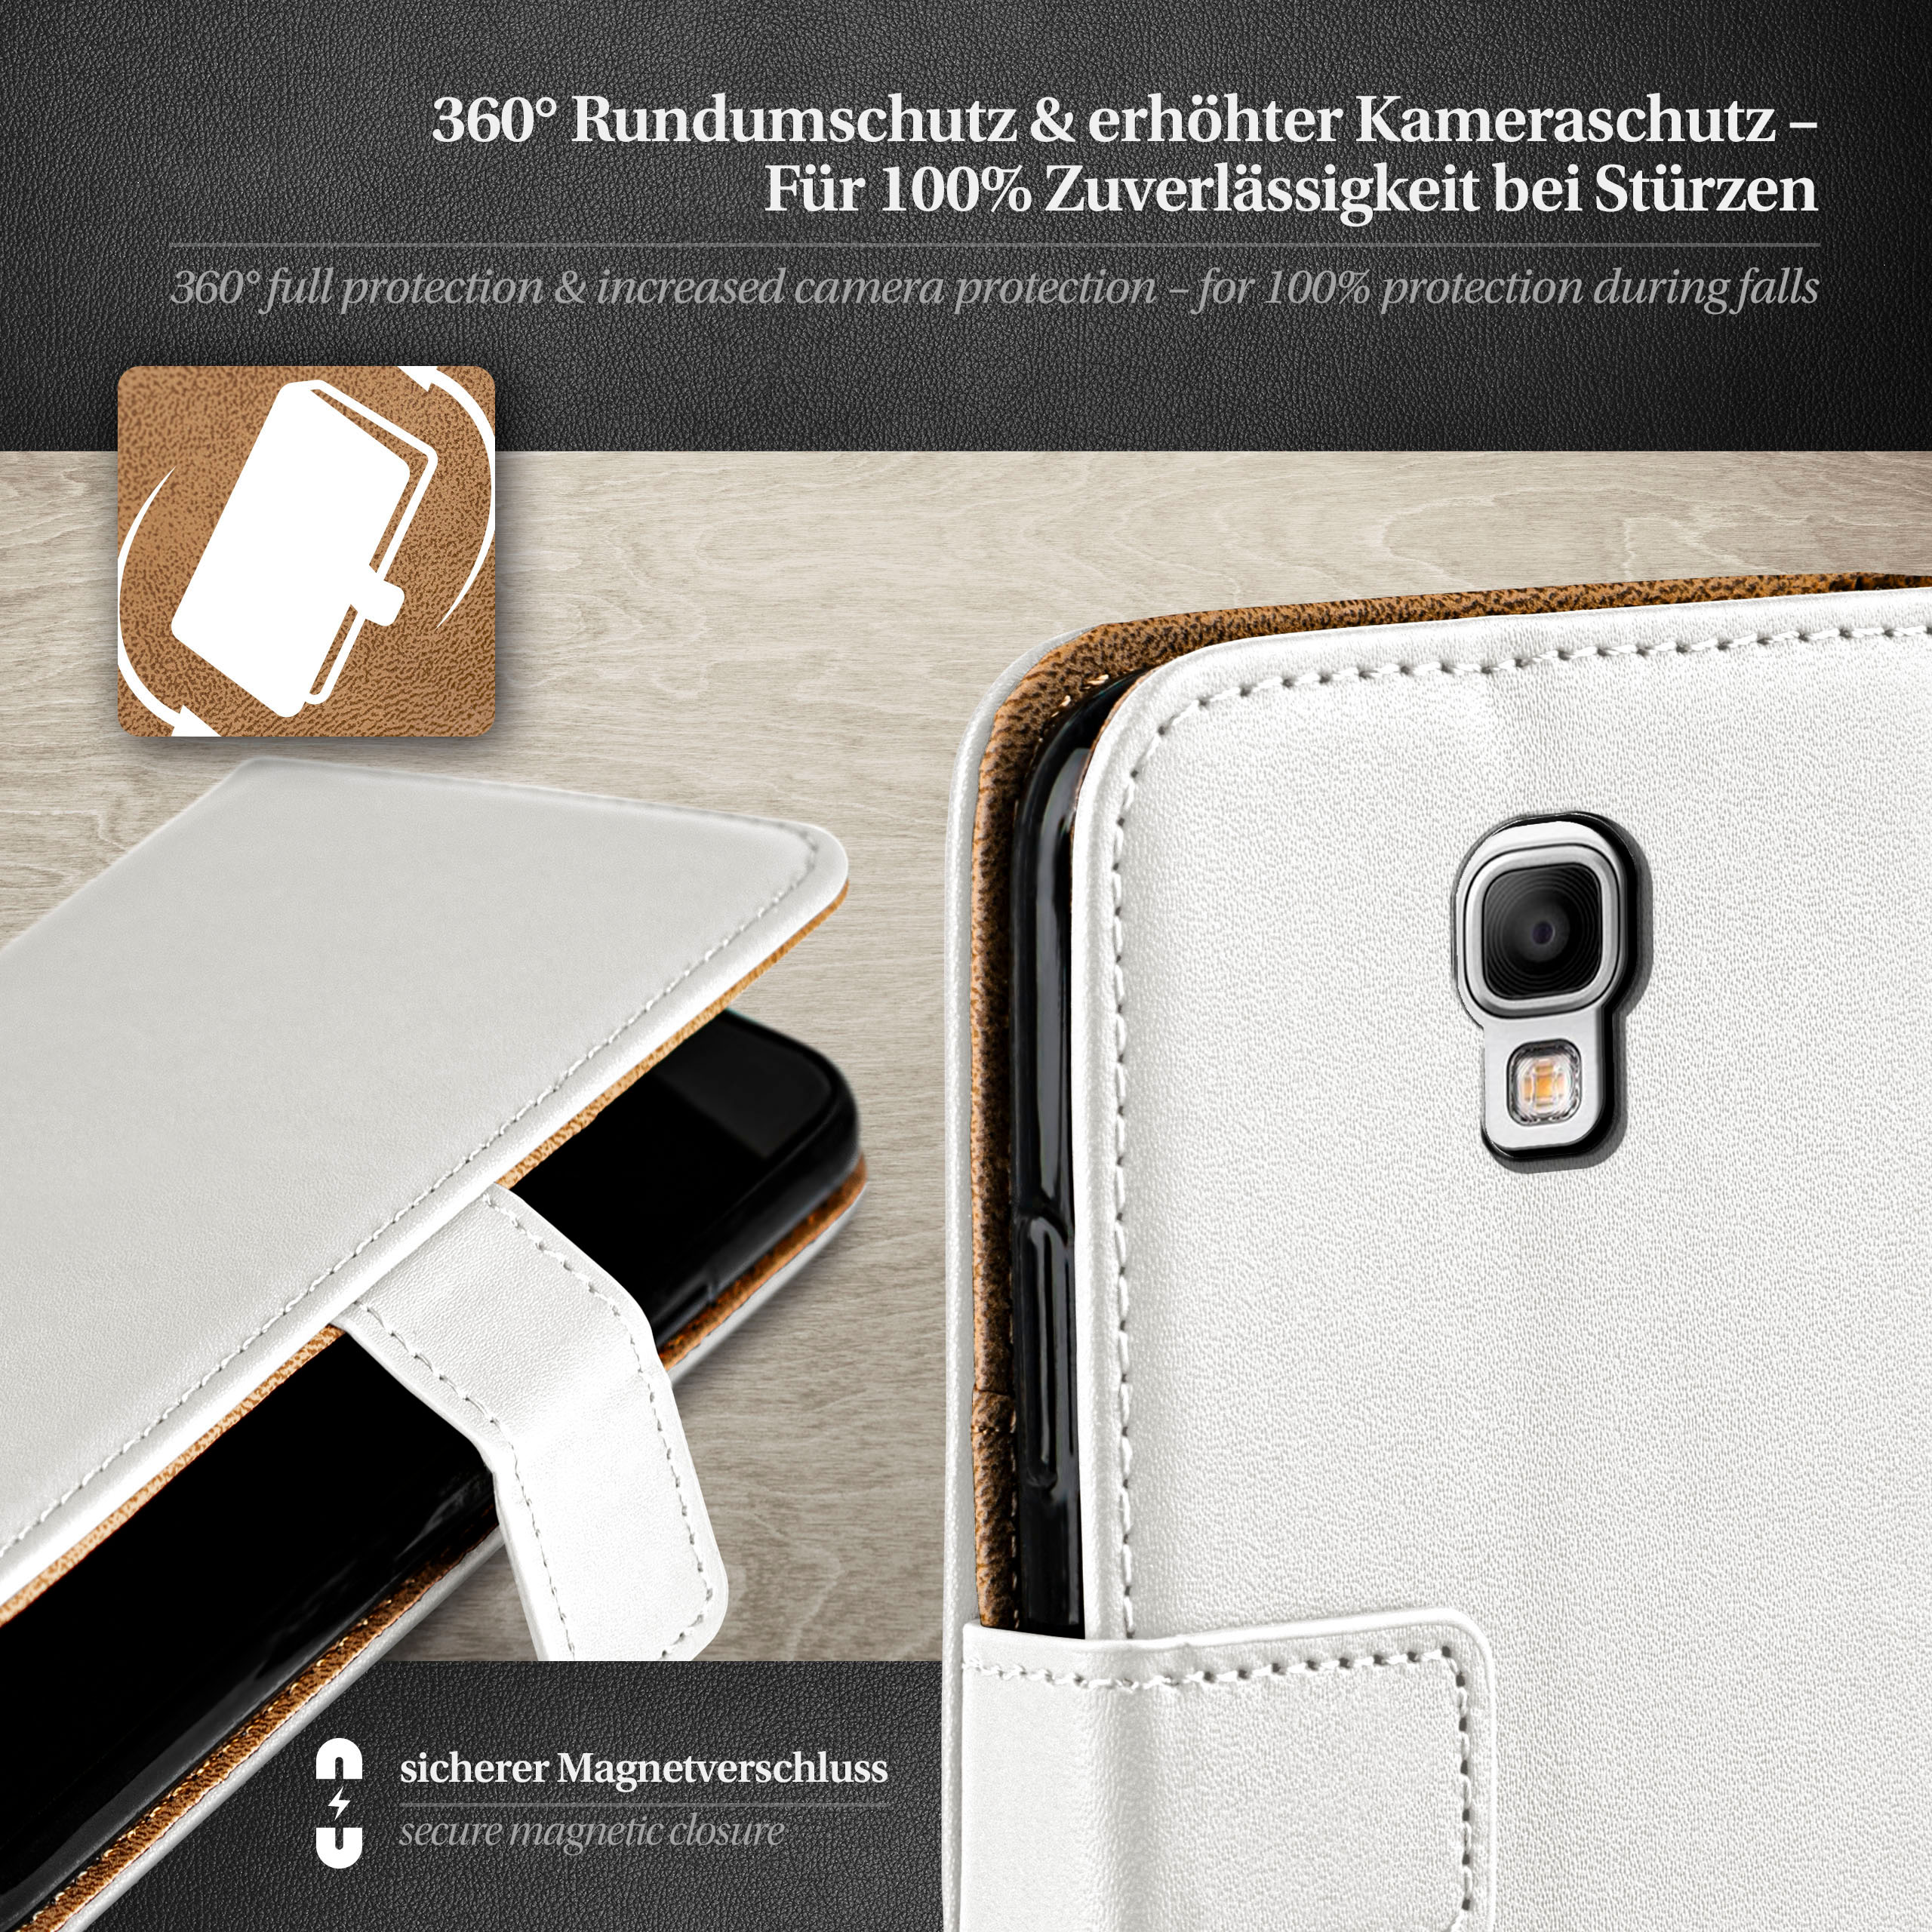 MOEX Book Case, Bookcover, 3 Samsung, Pearl-White Neo, Galaxy Note